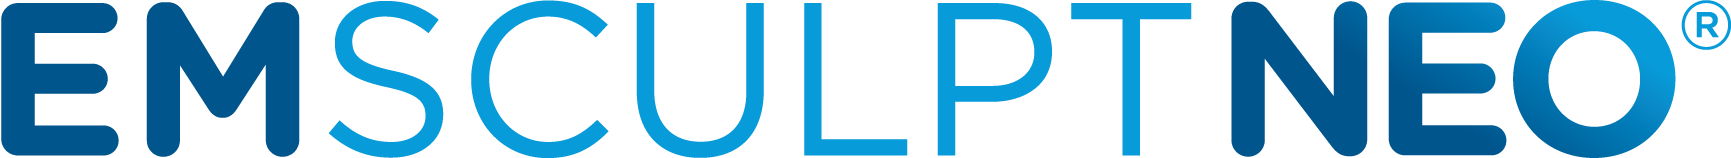 EMsculpt Neo blue logo